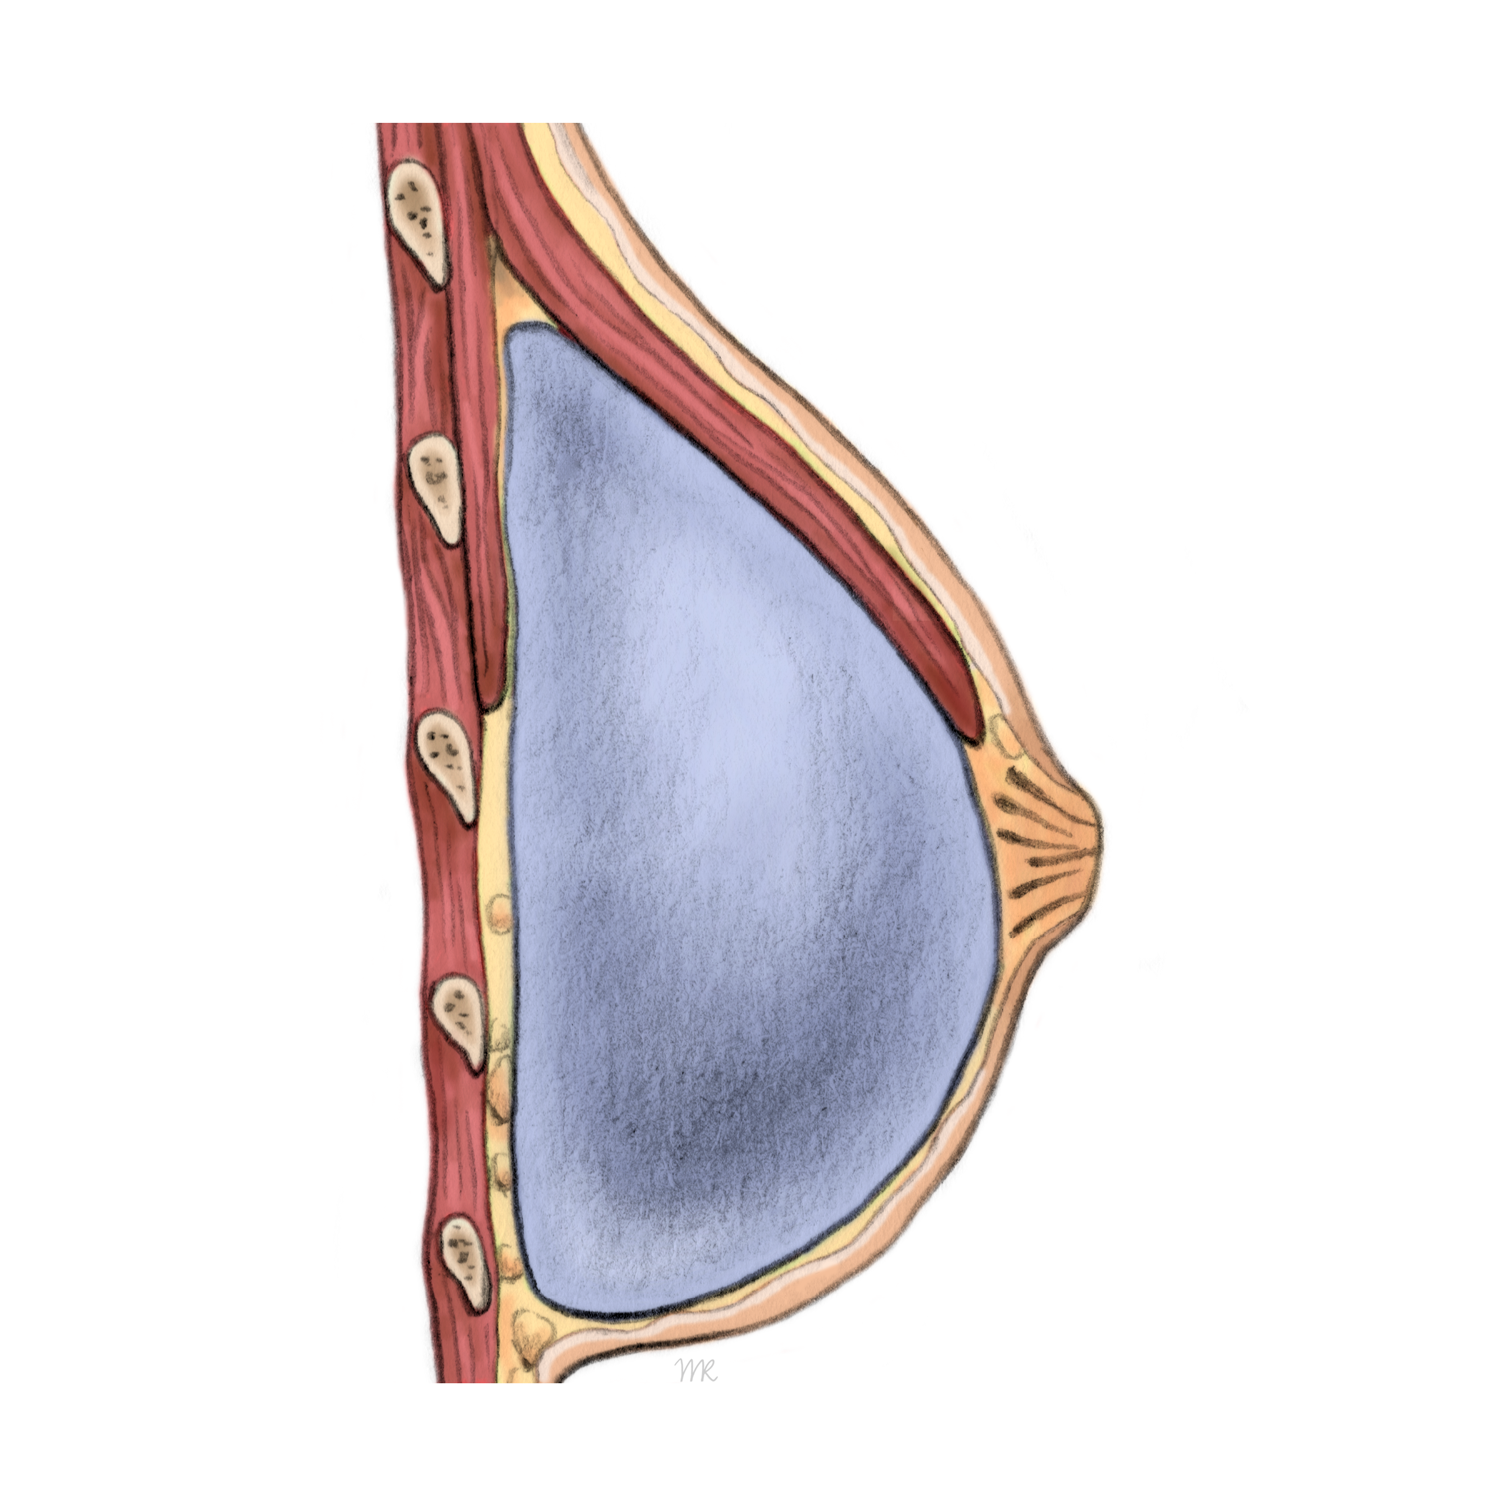 Silikonimplantat unter dem Brustmuskel